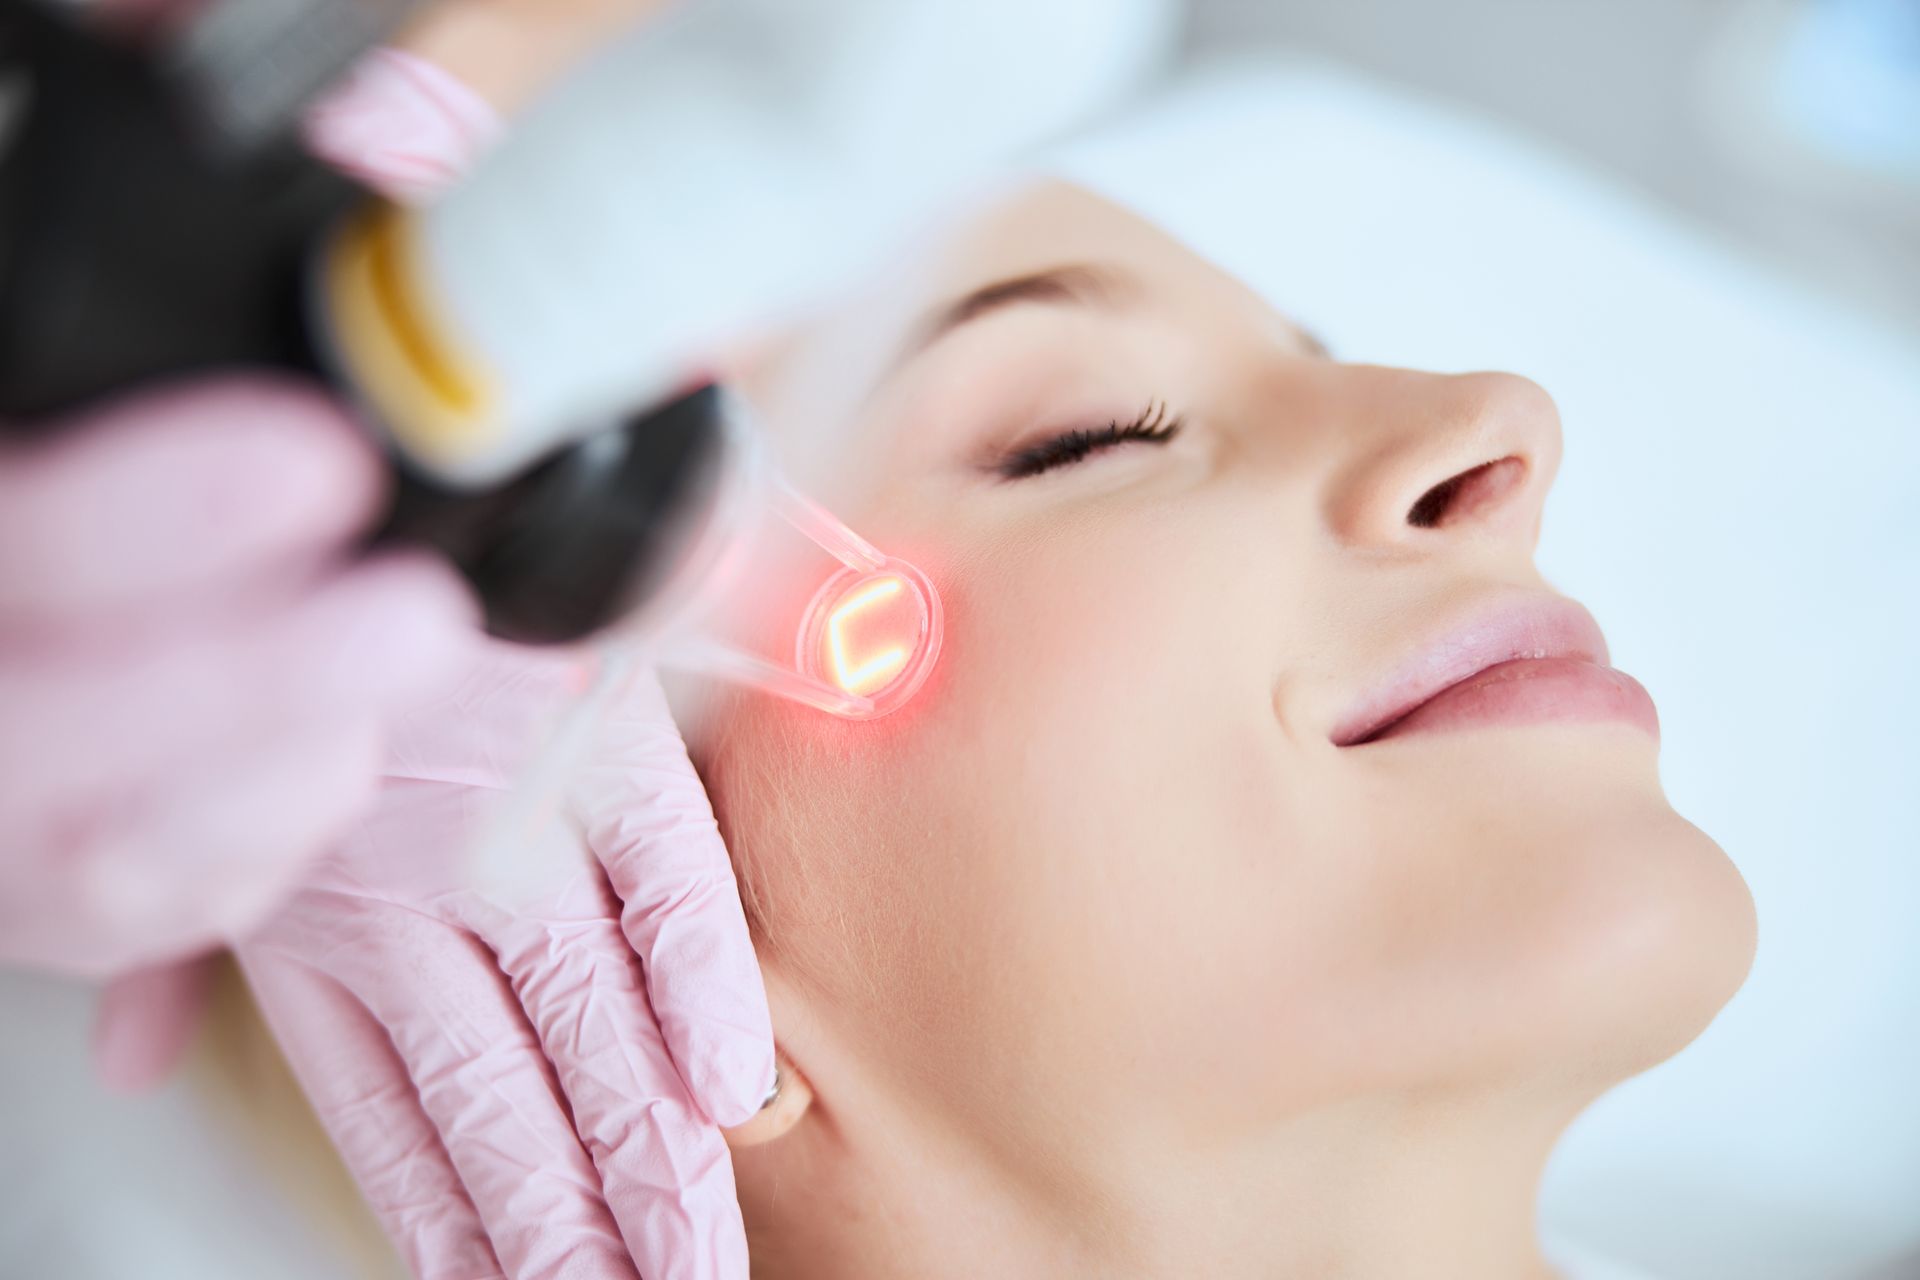 A woman receiving laser skin treatment.